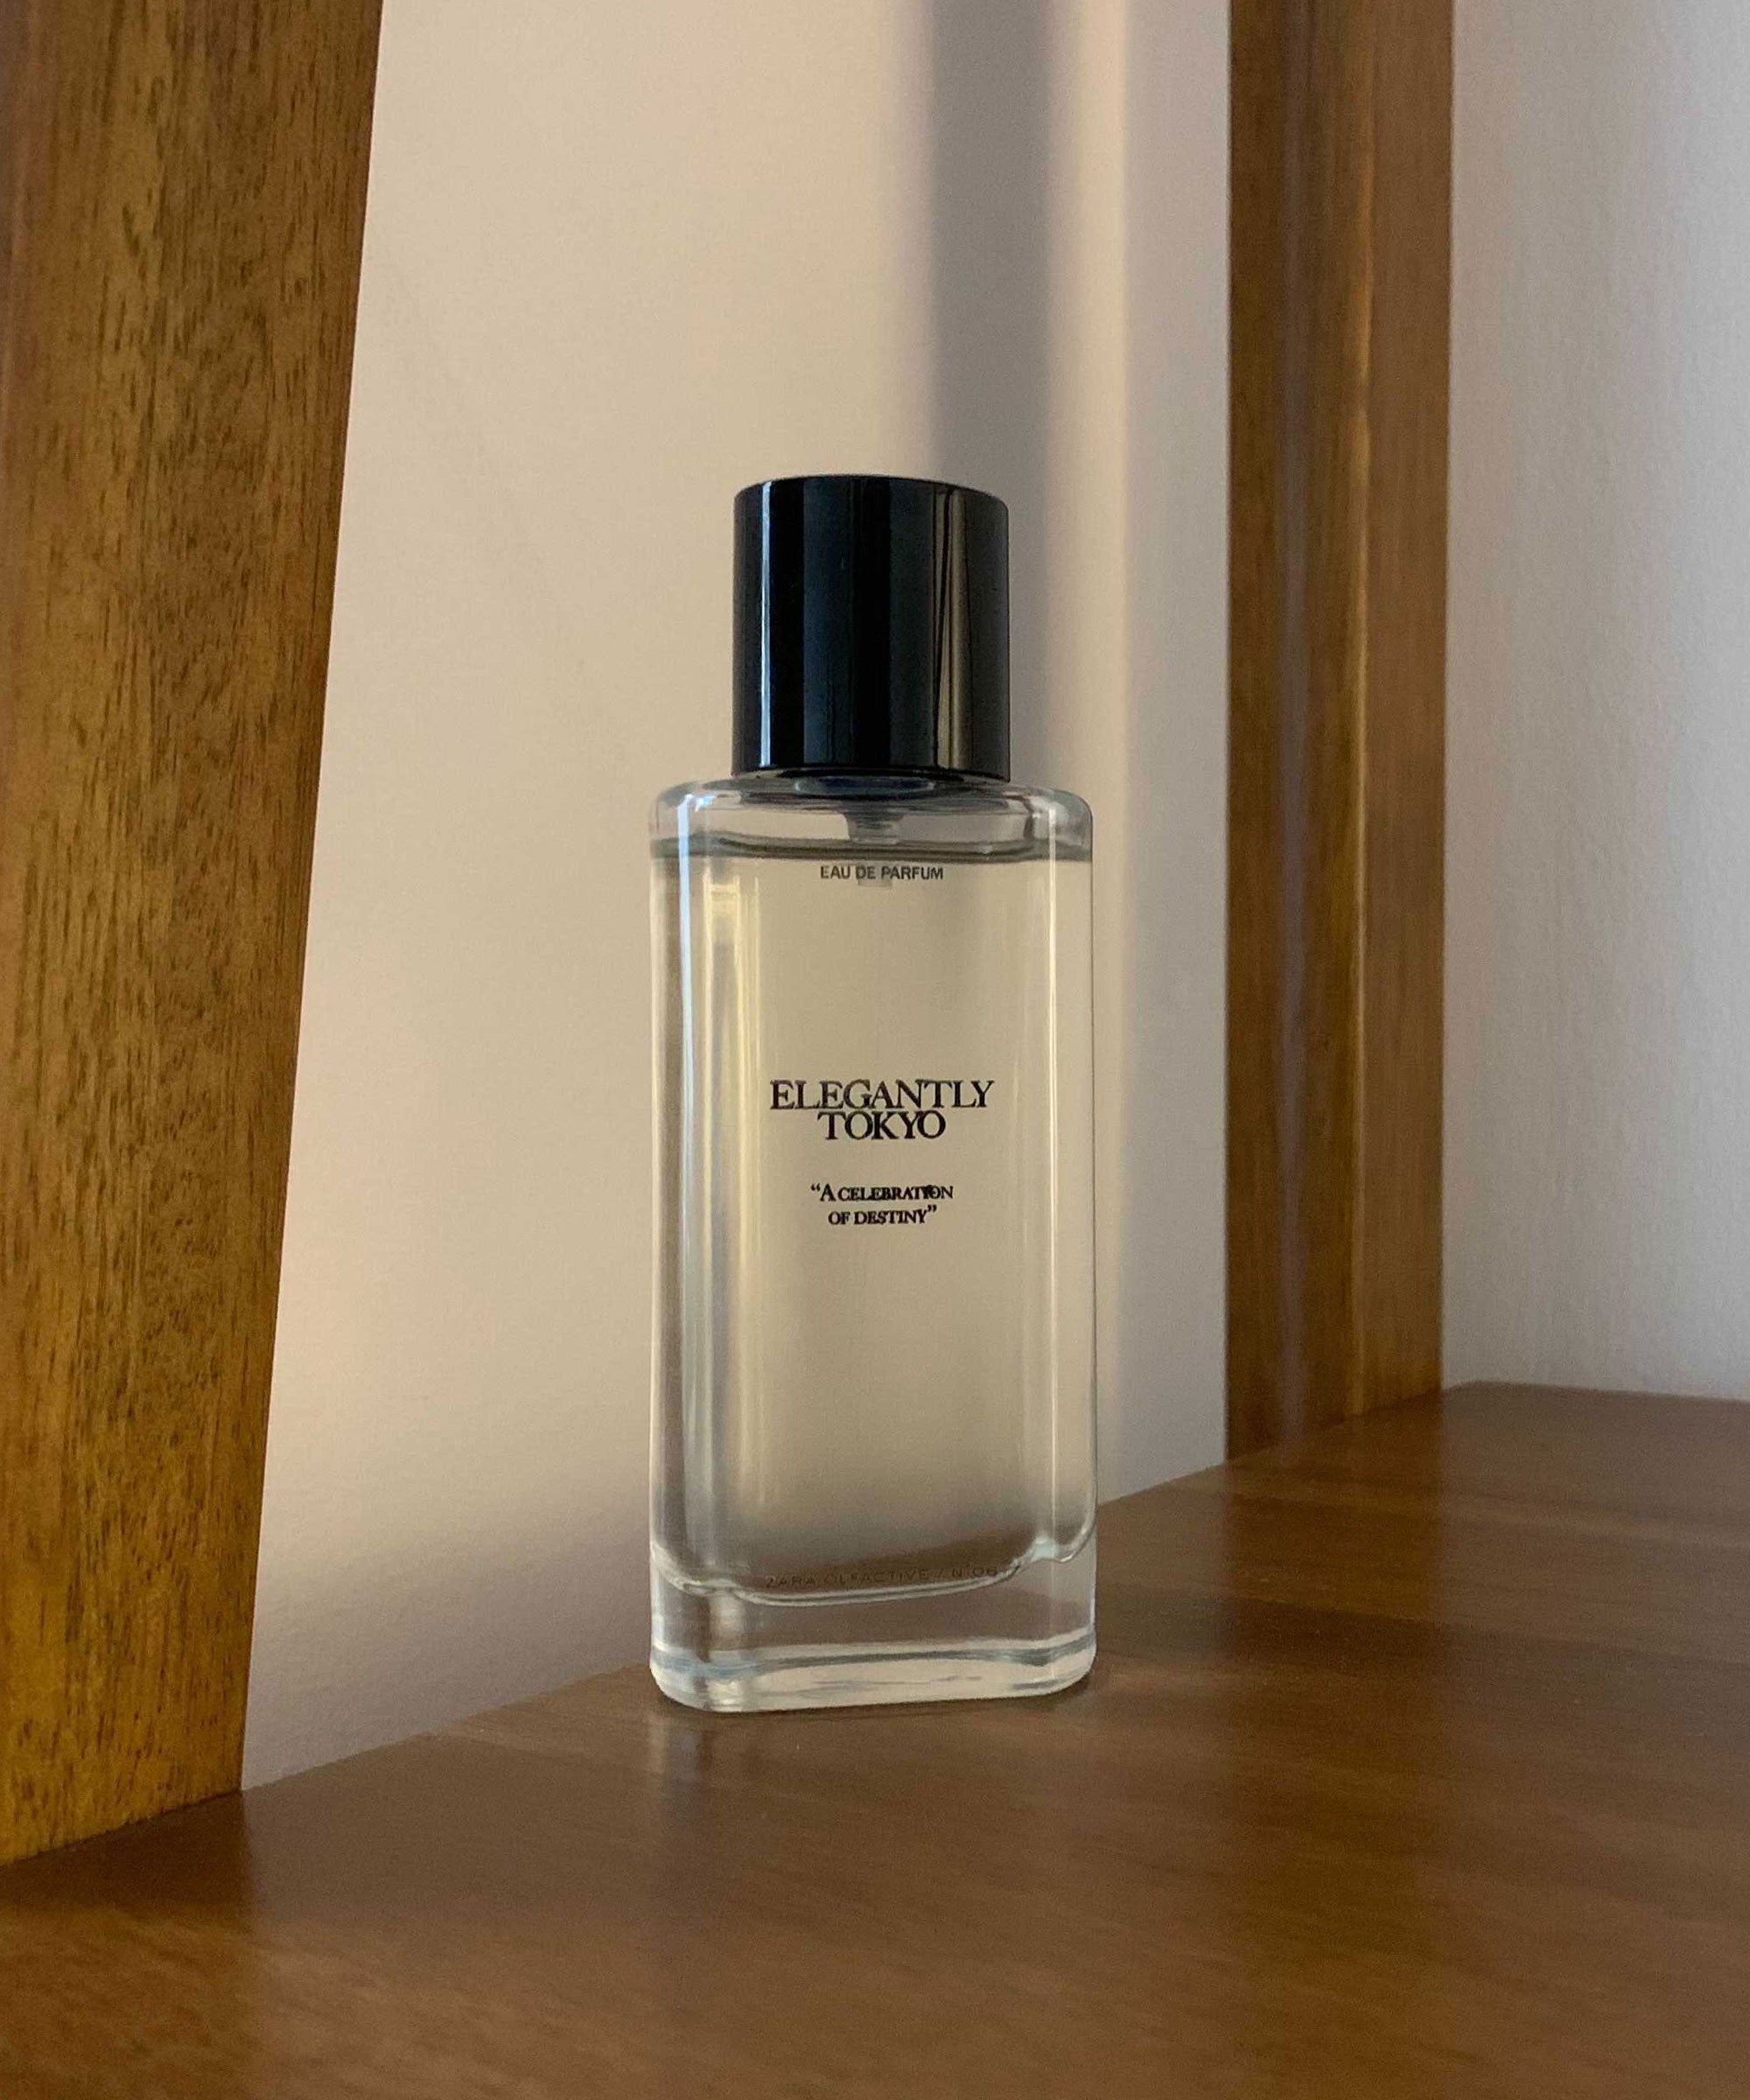 Inestimable Santal Perfume Oil Zara perfume - a new fragrance for